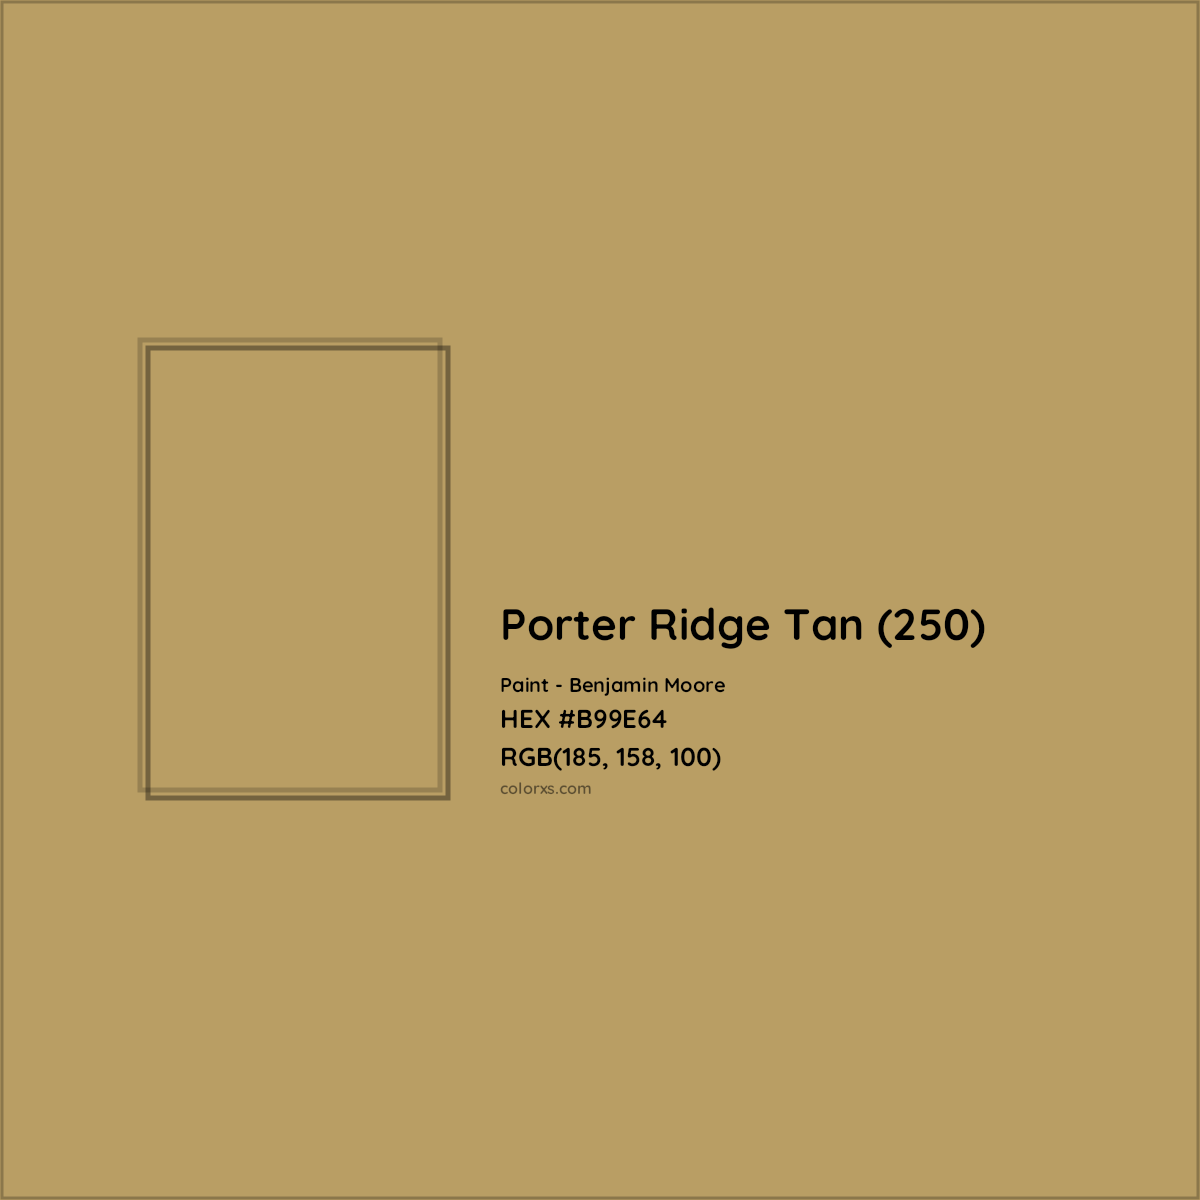 HEX #B99E64 Porter Ridge Tan (250) Paint Benjamin Moore - Color Code